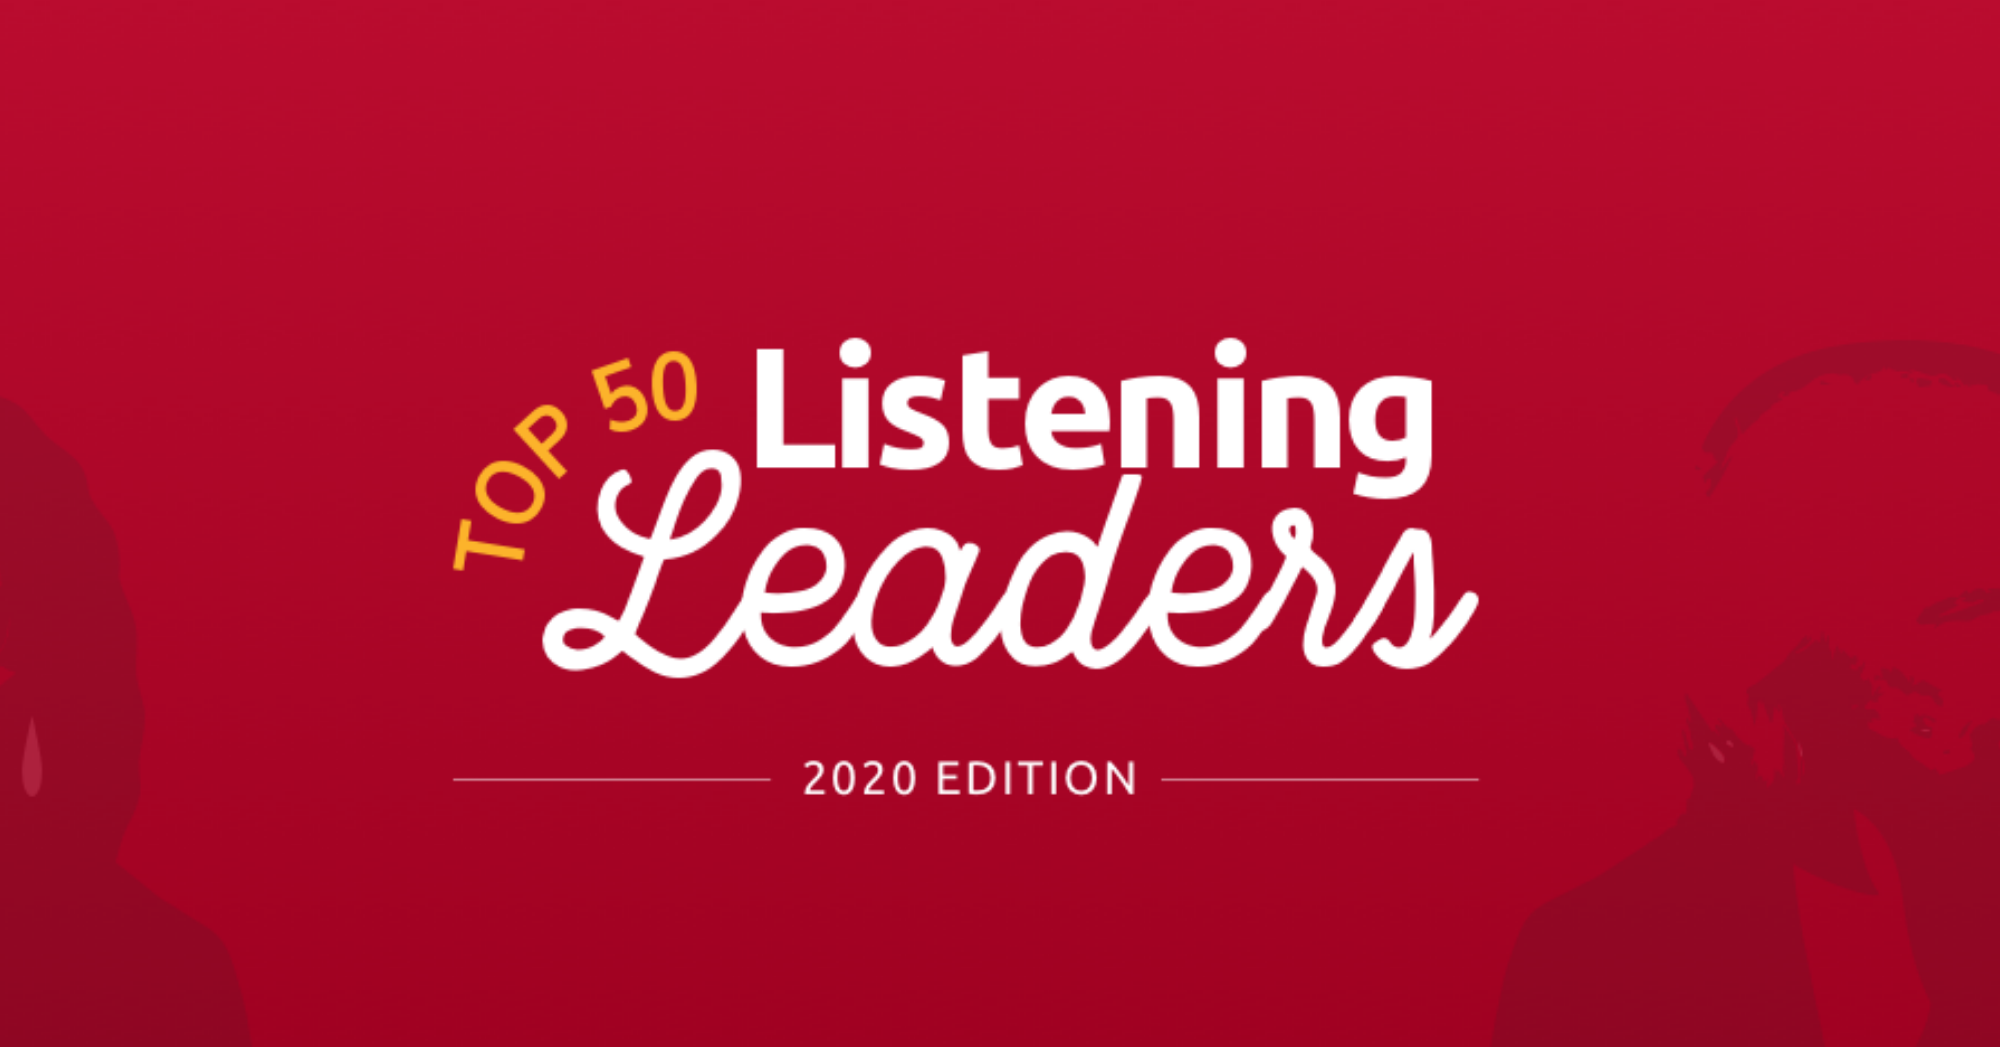 The Top 50 Listening Leaders